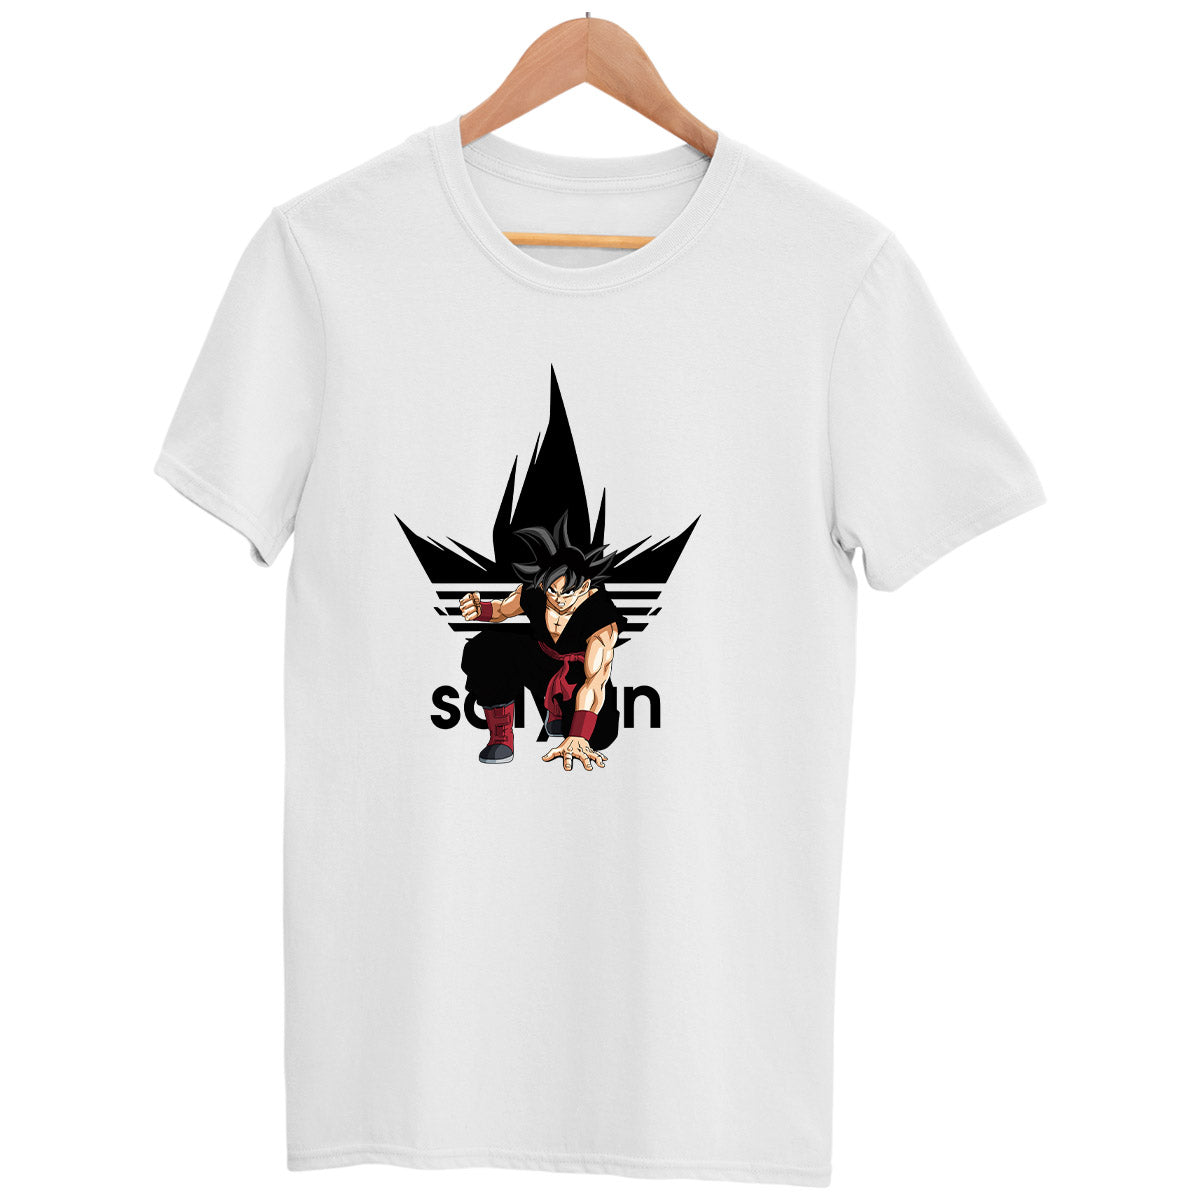 Son Goku Dragon Ball Super Adidas Saiyan Japanese Anime Adult Unisex White T-shirt